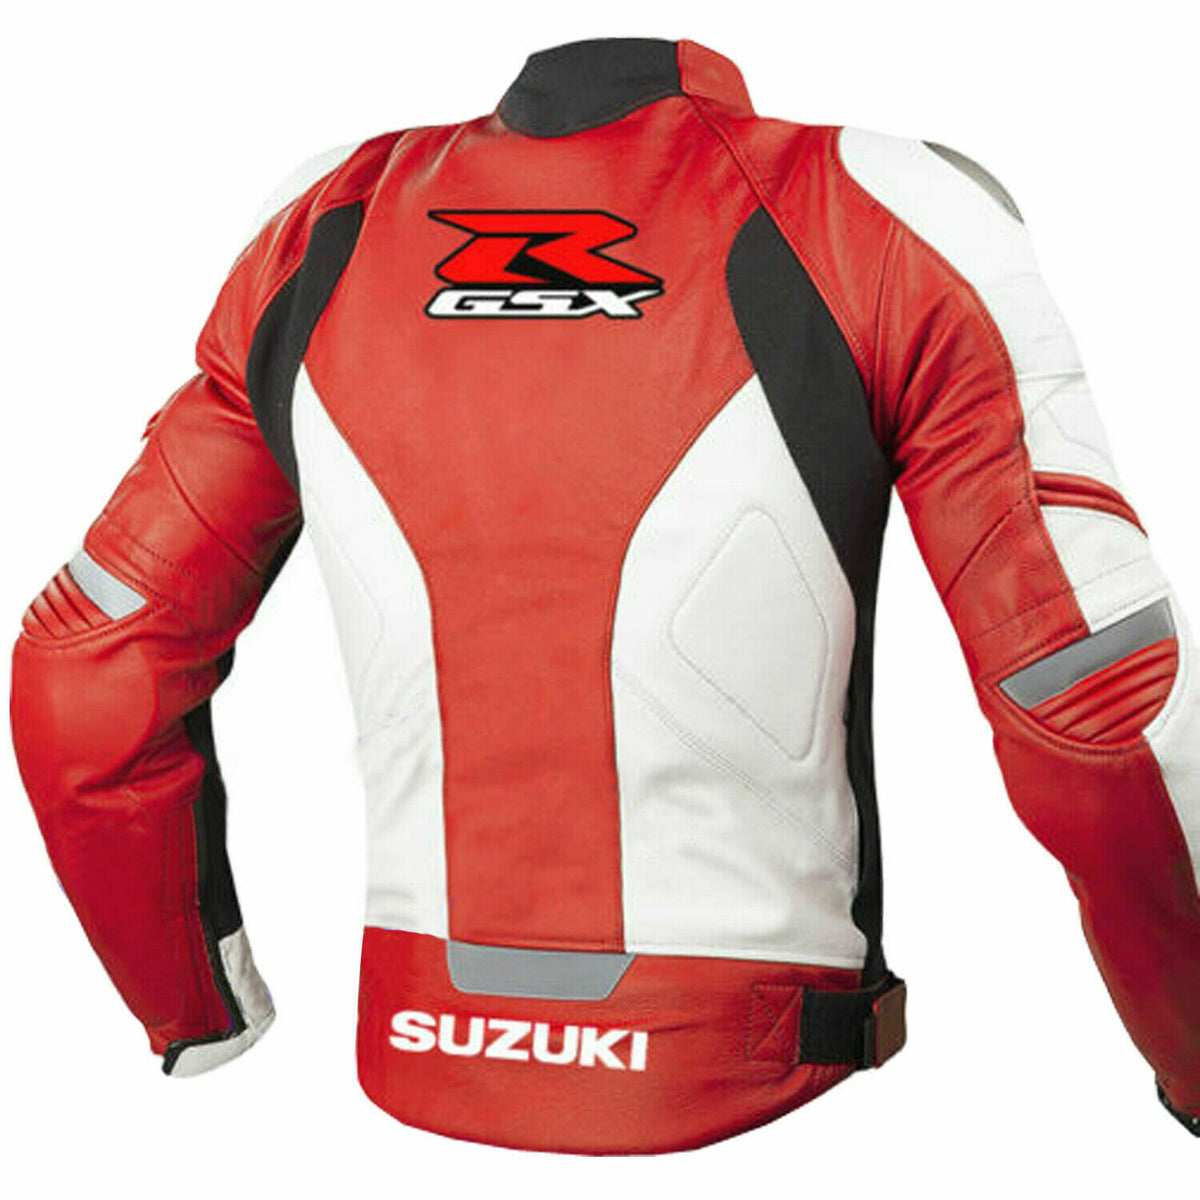 Suzuki GSXR Motorcycle Jackets Leather Racing Motorbike Sports Armors Protective